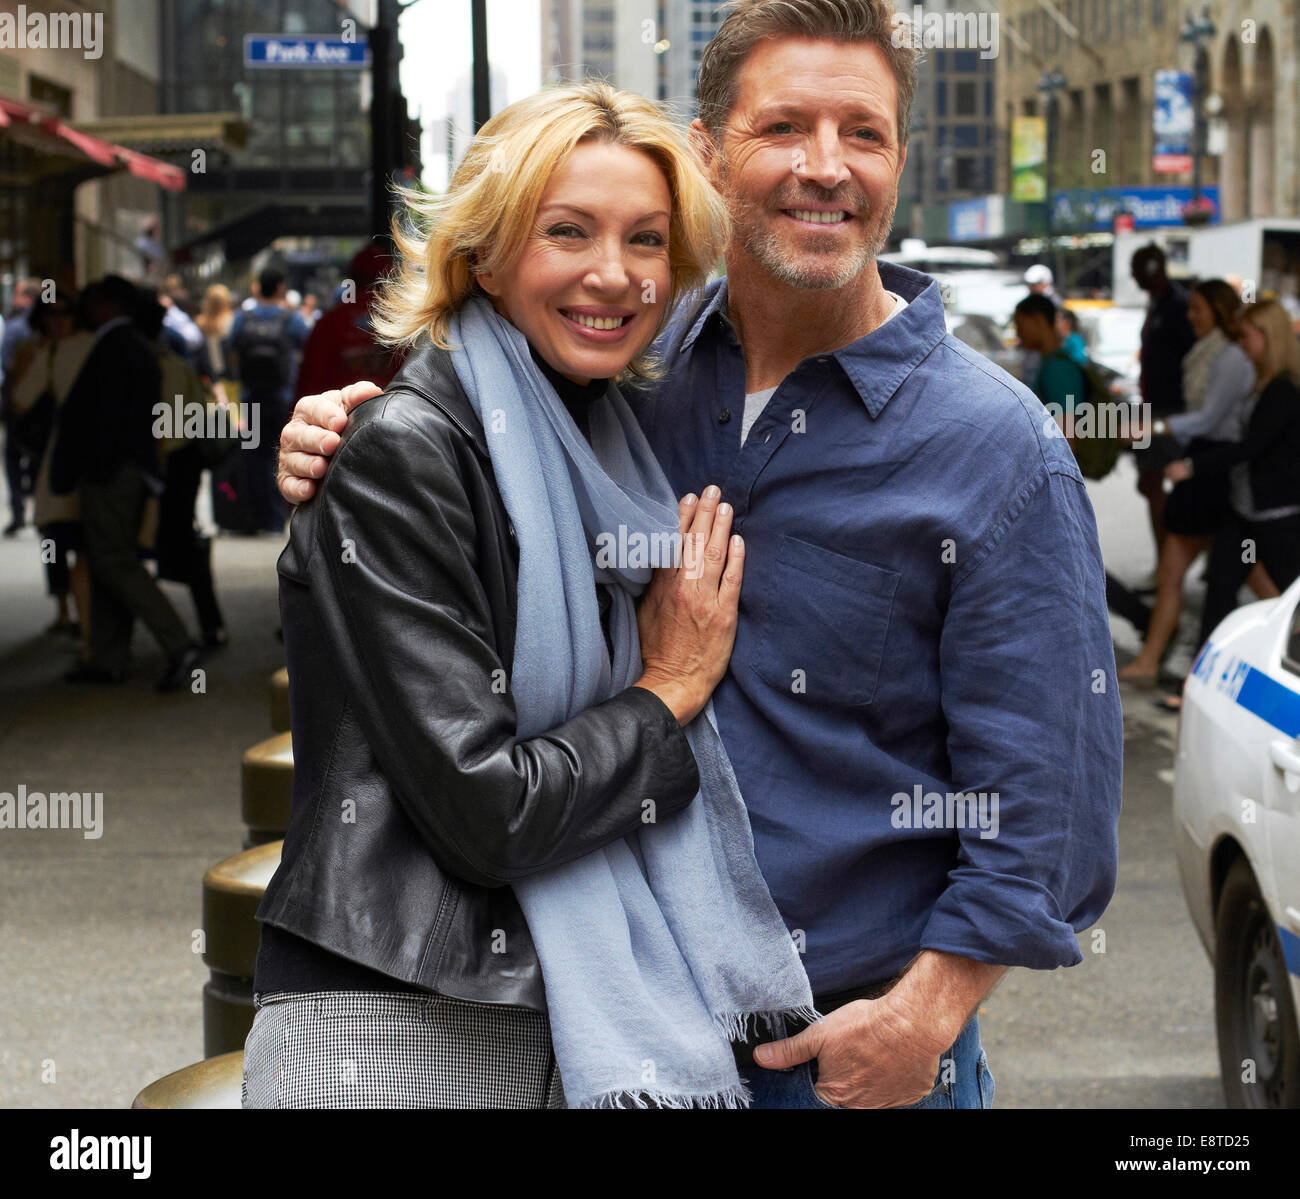 Caucasian couple hugging on city street, New York City, New York, United States Stock Photo